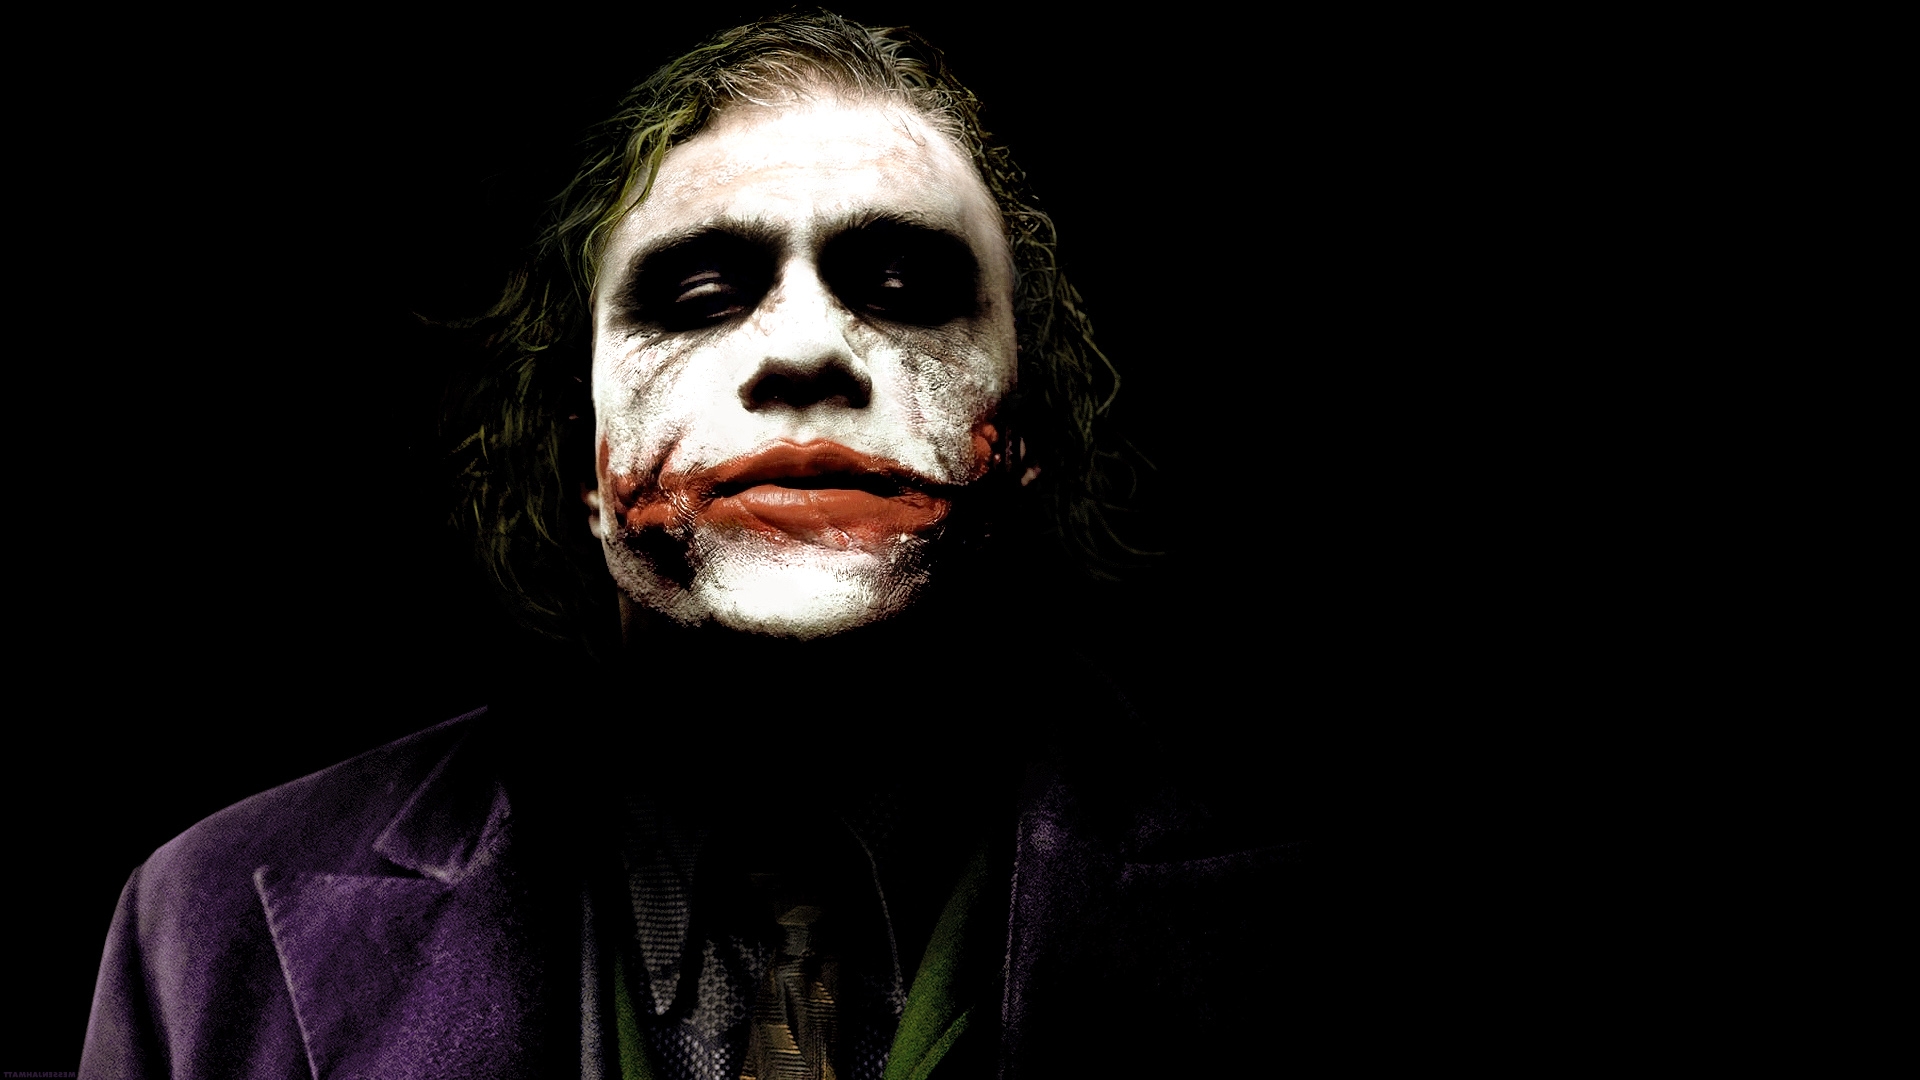 🔥 Free download Download hd wallpapers of Joker The Dark Knight Movie